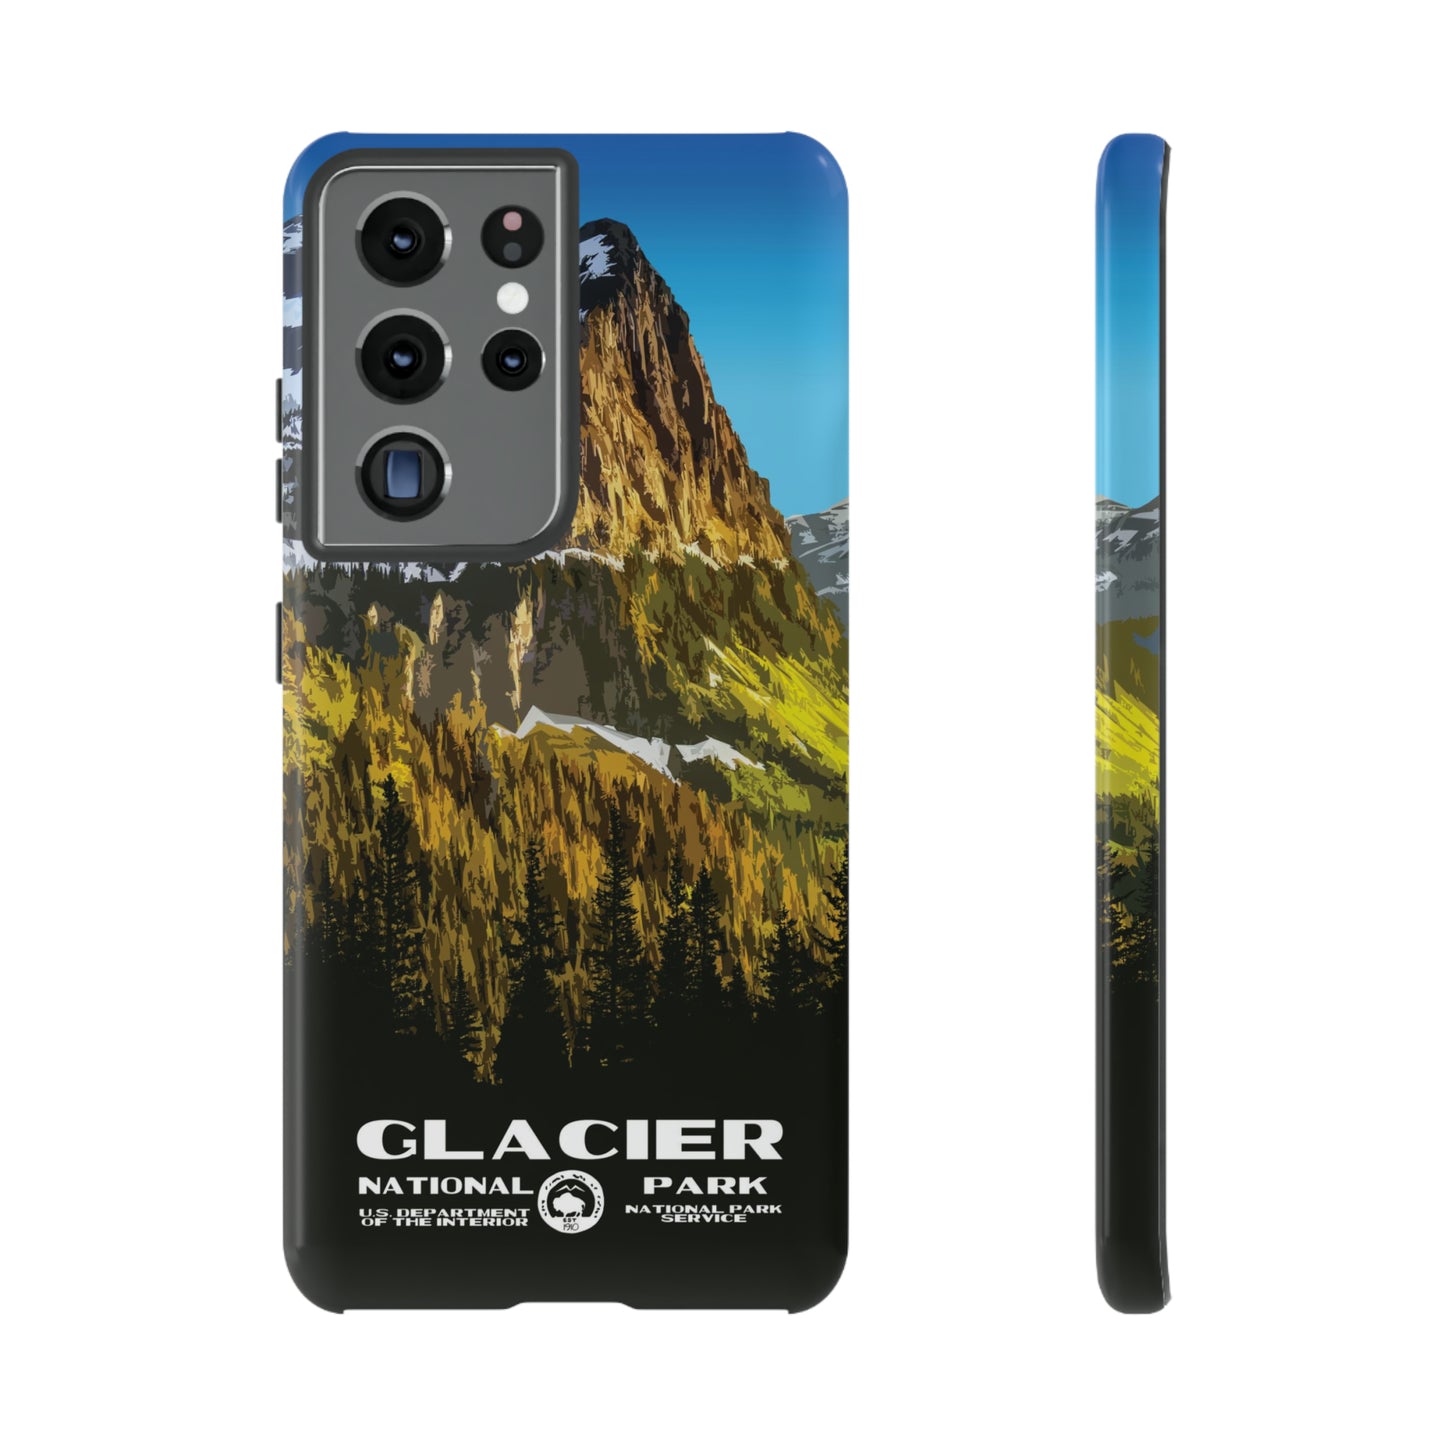 Glacier National Park Phone Case